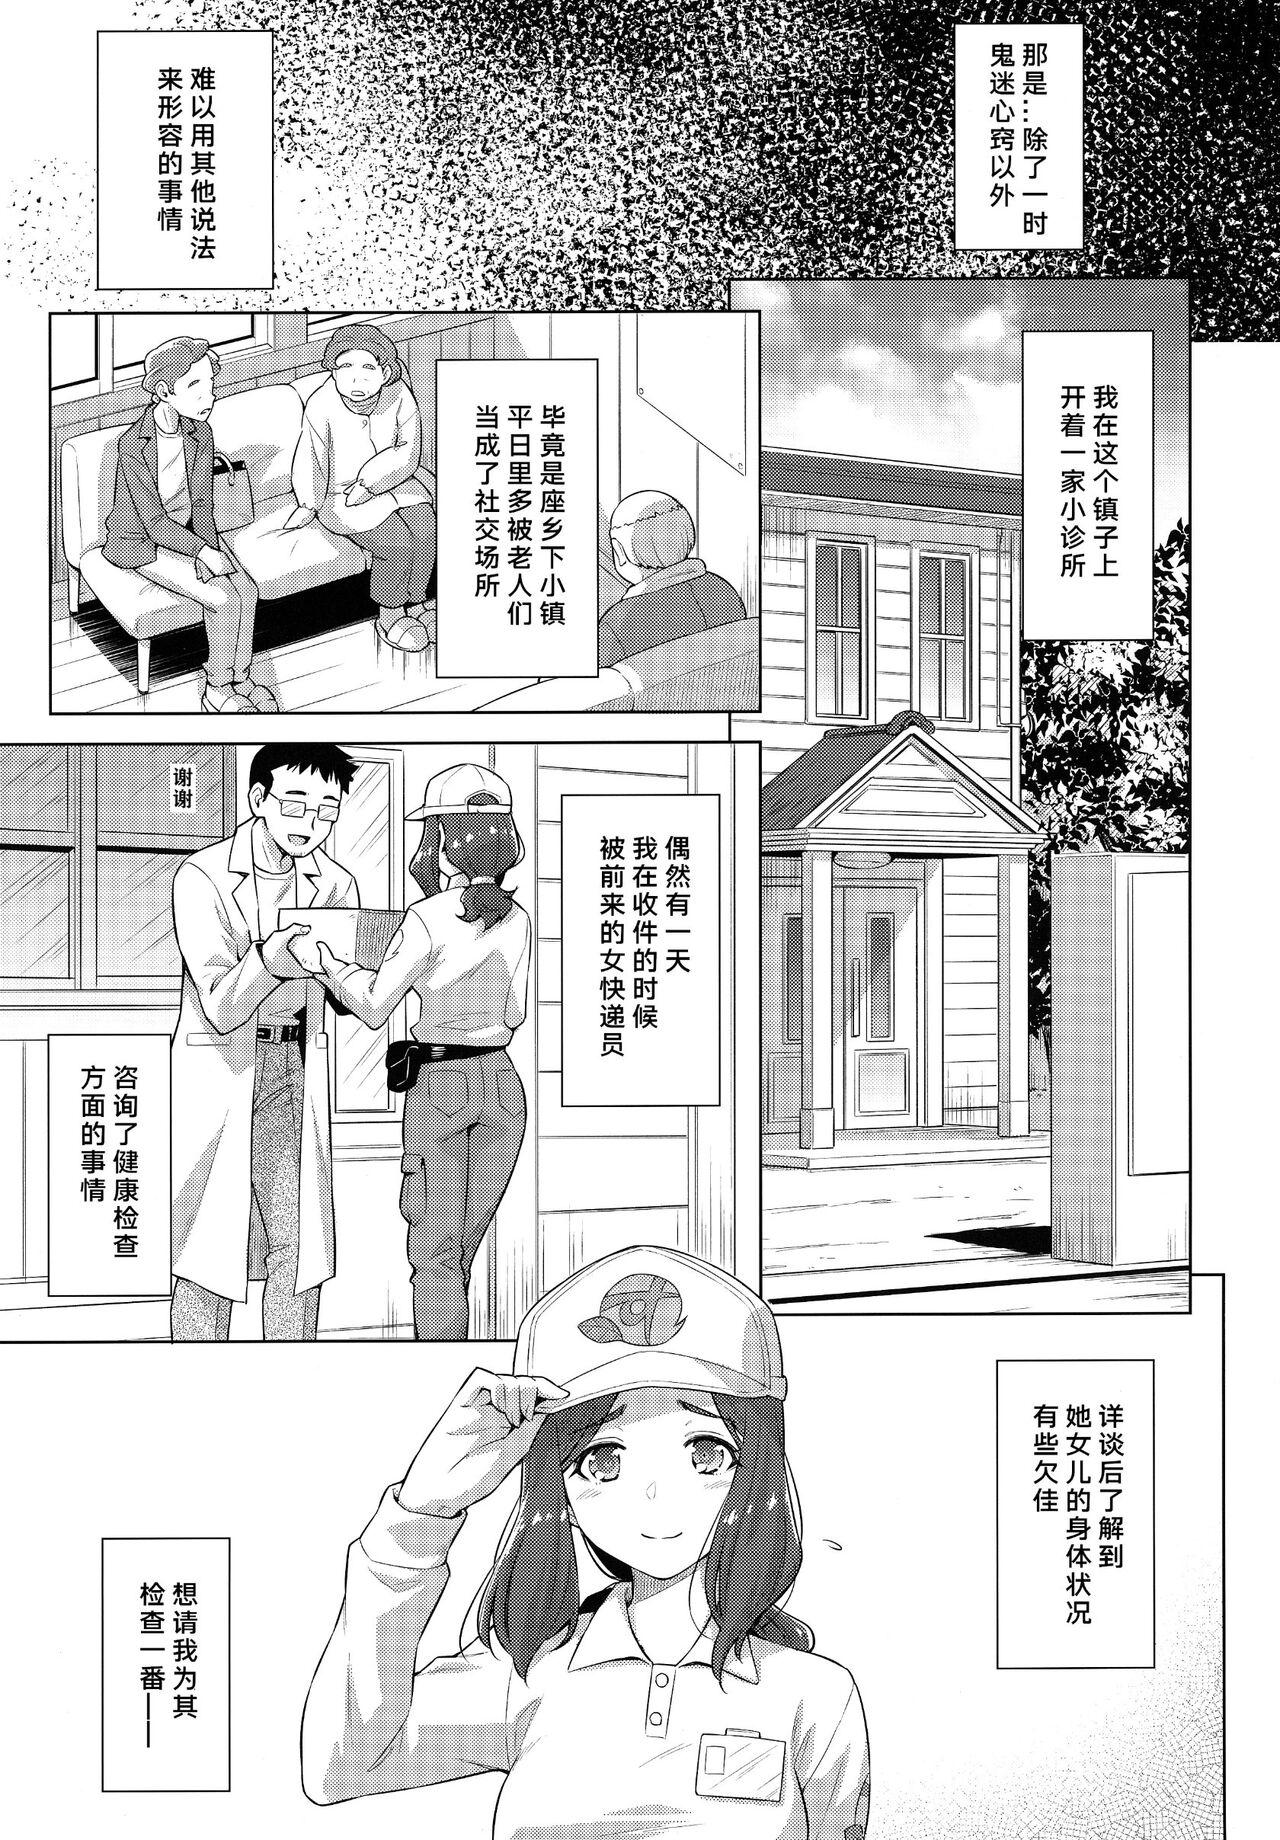 Moaning Boku no Shinryoujo e Youkoso. - Healin good precure Oil - Page 4